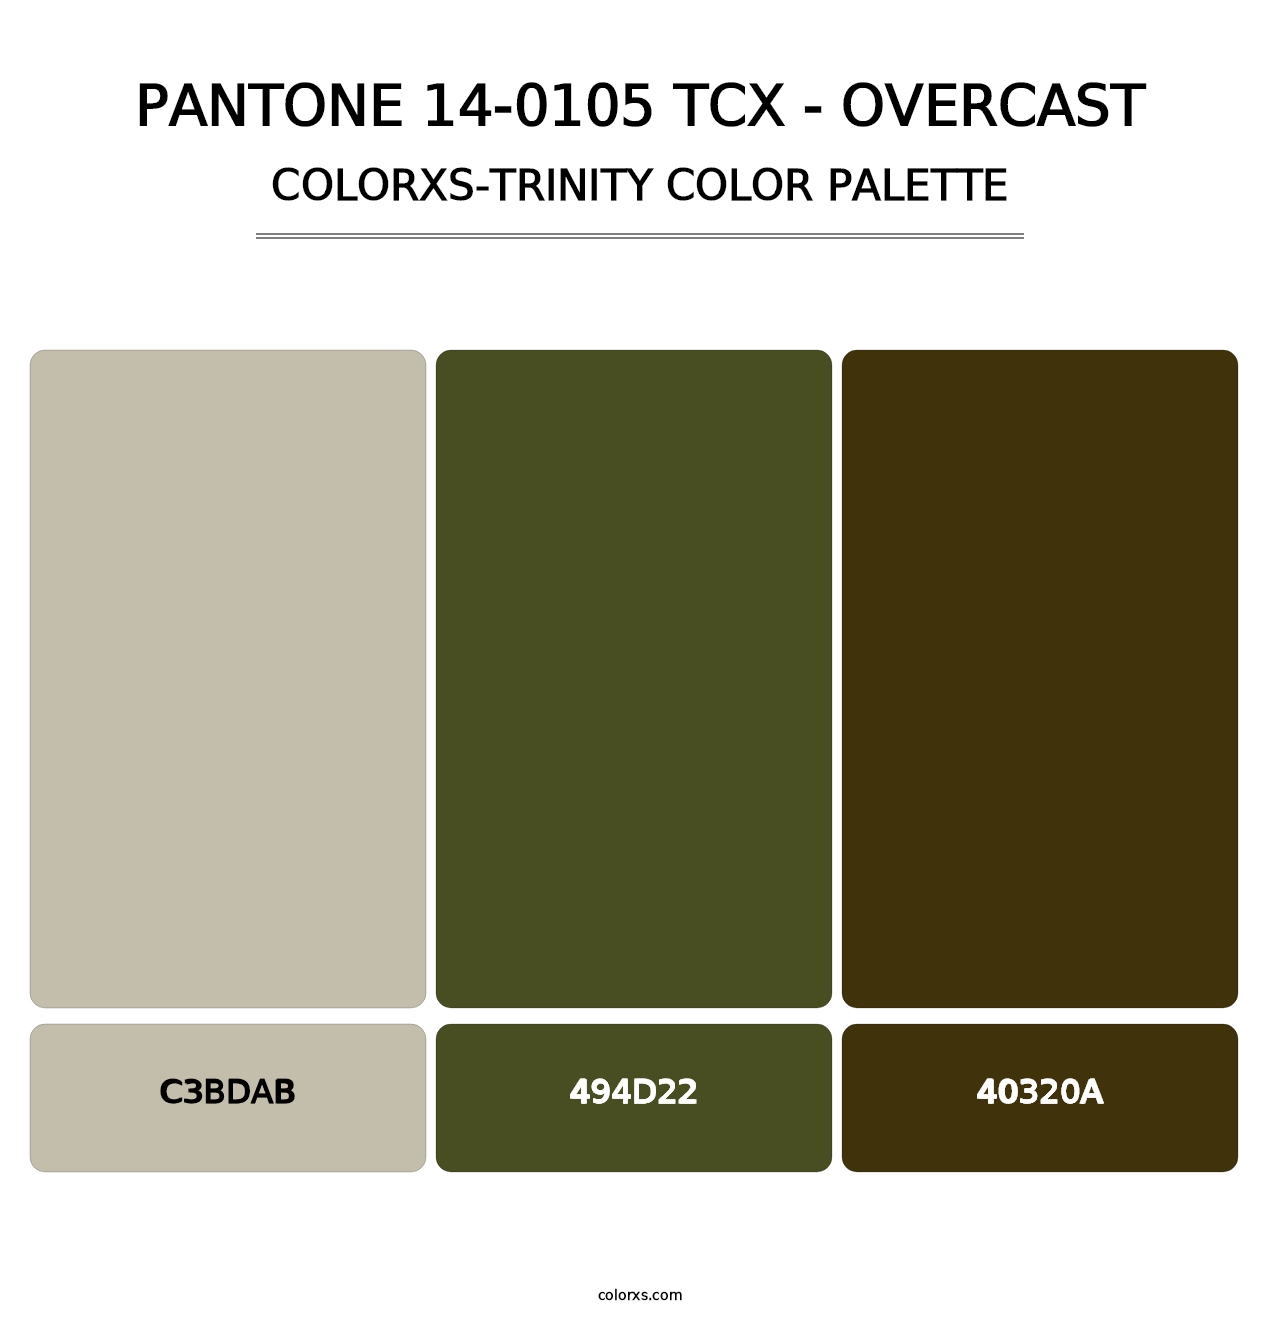 PANTONE 14-0105 TCX - Overcast - Colorxs Trinity Palette